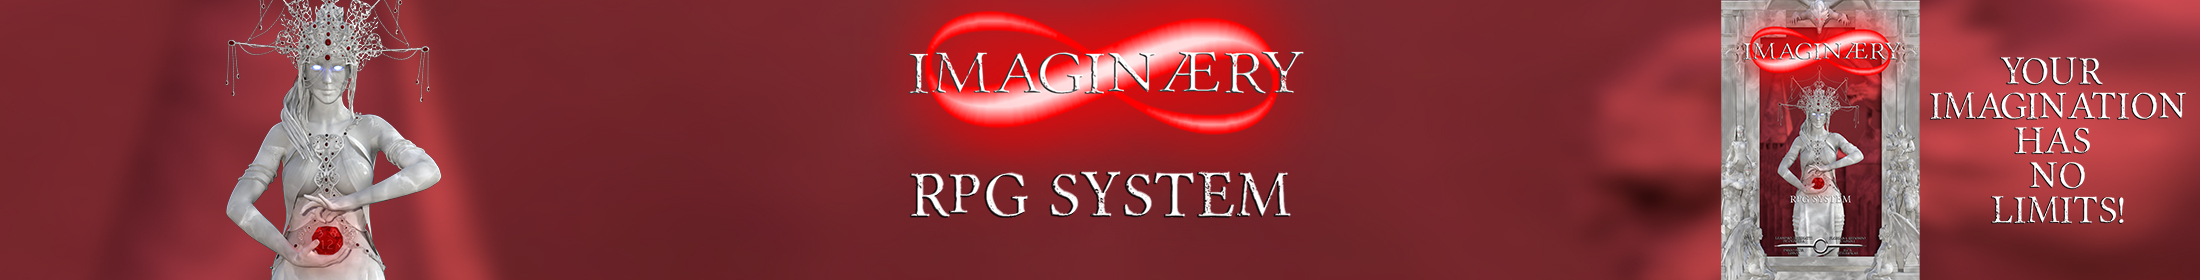 IMAGINAERY RPG System